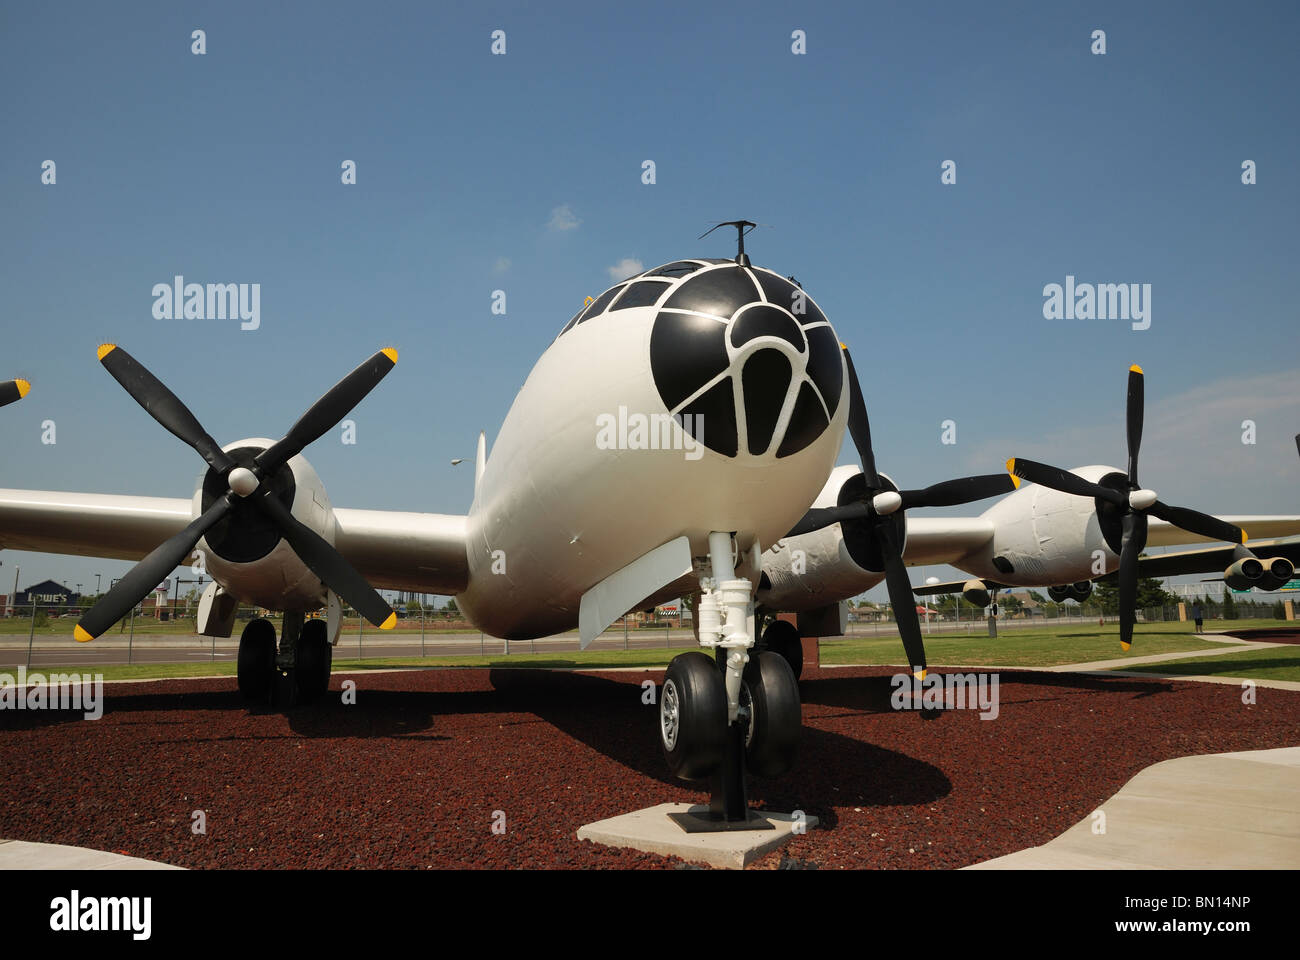 A B-29 'Superfortress' bomber on display at the Tinker Air Force Base, Oklahoma City, Oklahoma, USA. Stock Photo